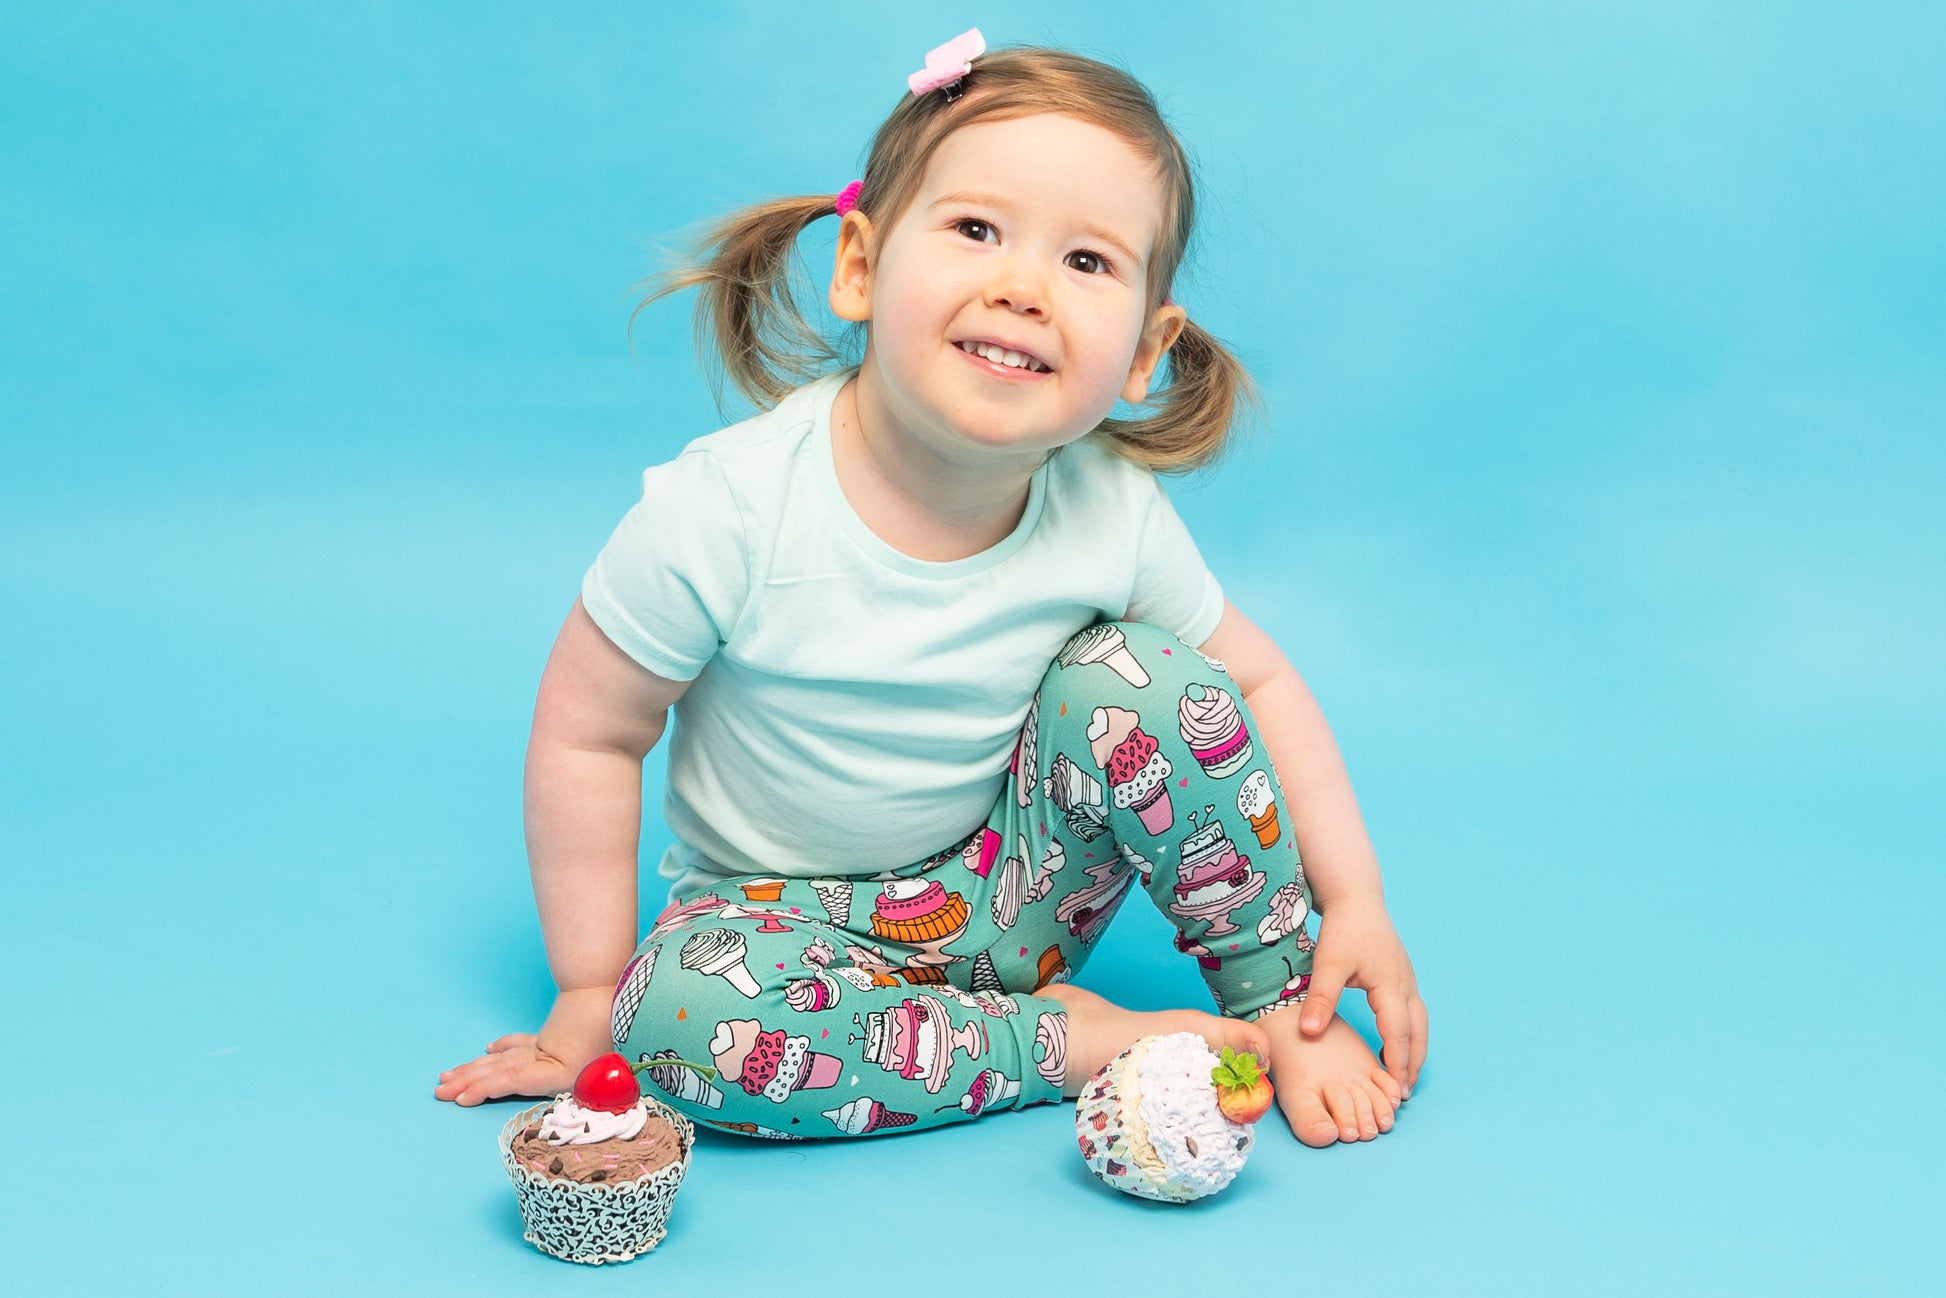 Cakes & Ice Cream Children's Cotton Jersey Leggings – Rainbows & Sprinkles